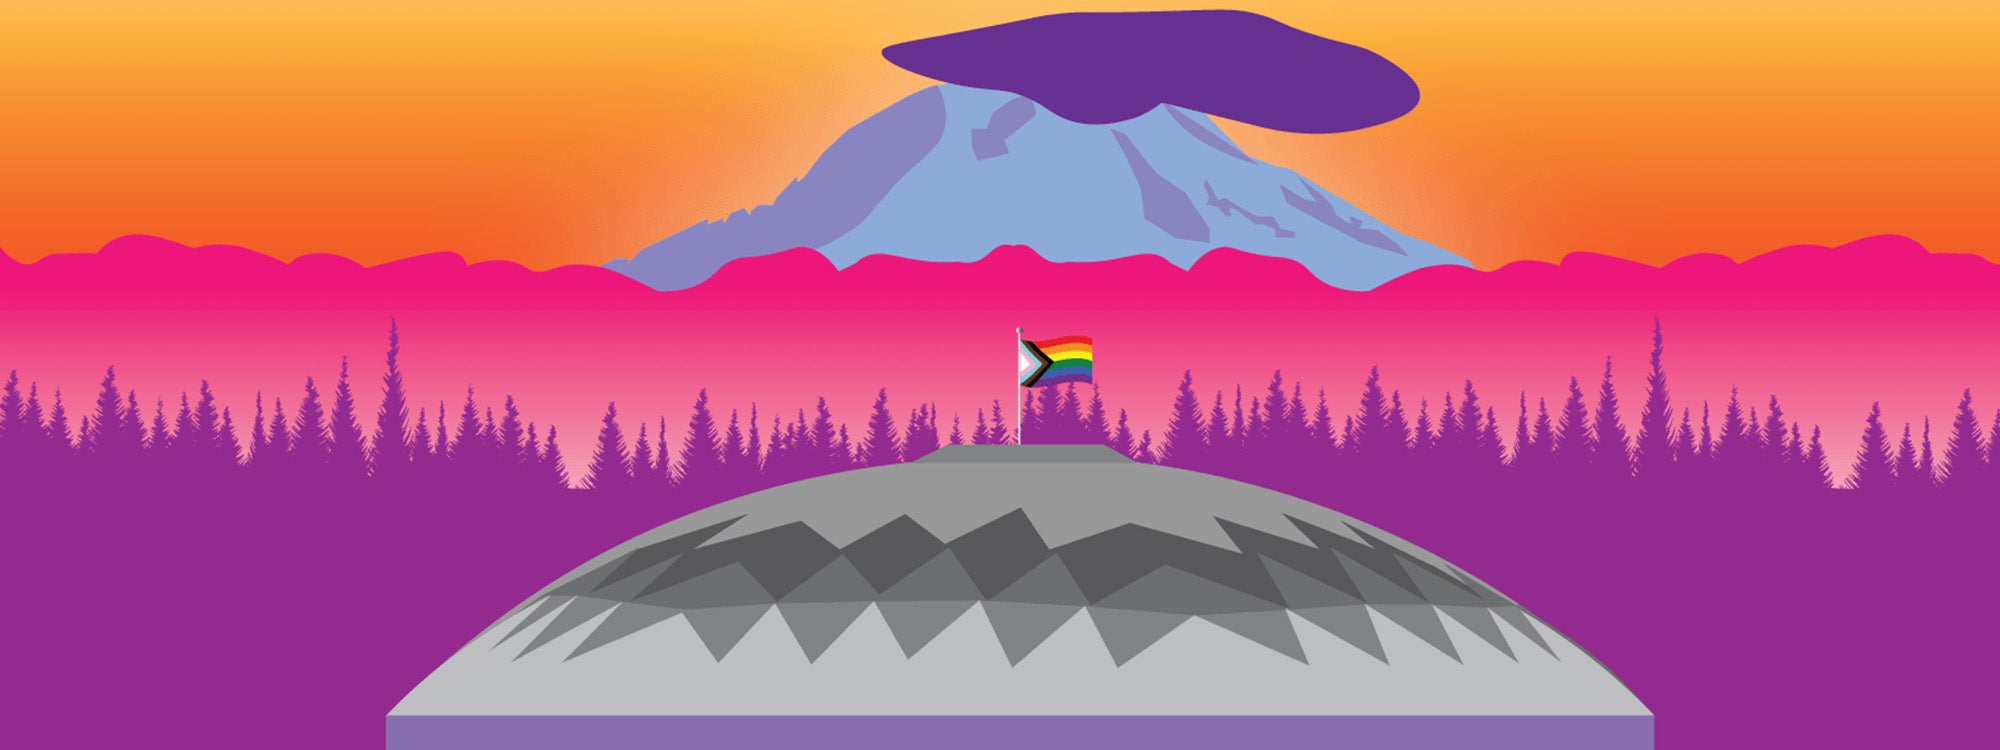 Tacoma Pride Flag Raising